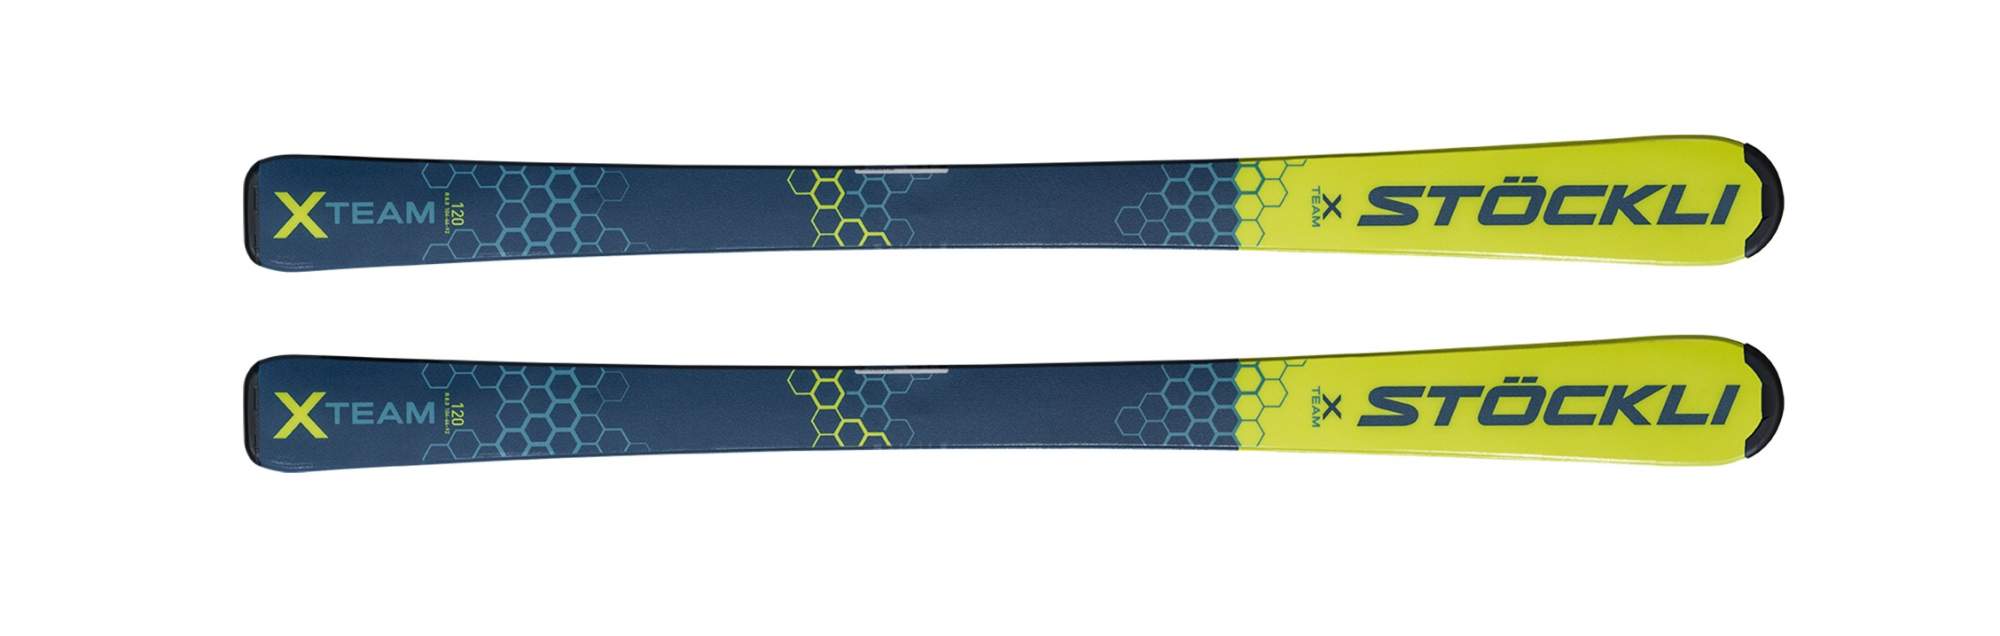 Горные лыжи Stockli X-Team + L6 J70 2022 blue/yellow, 130 см